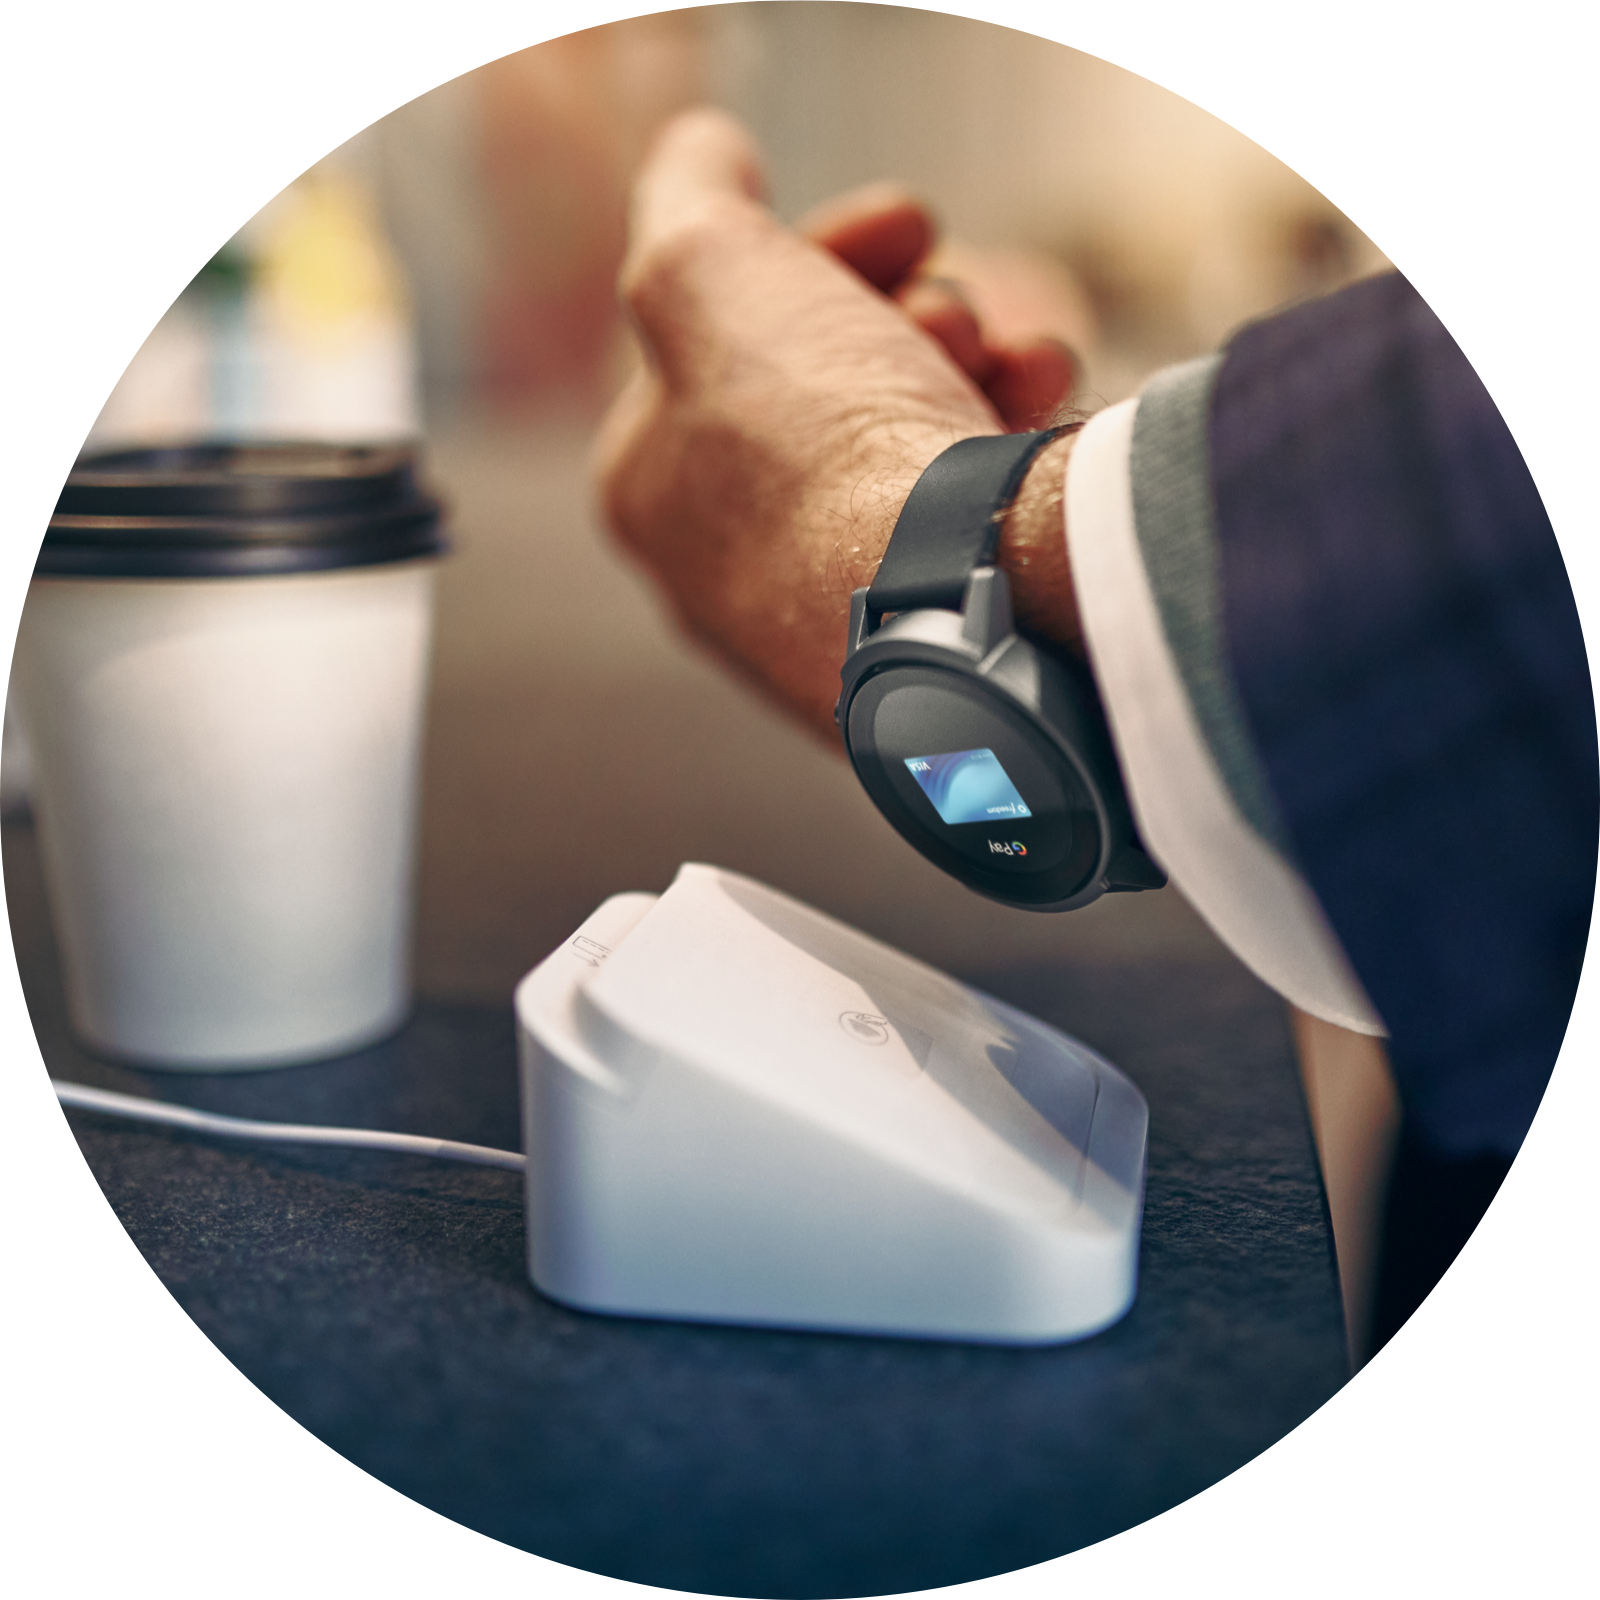  Ticwatch E3 Smart Watch Wear OS by Google for Men Women  Qualcomm Snapdragon Wear 4100 Platform Health Monitor Fitness Tracker GPS  NFC Mic Speaker IP68 Waterproof iOS Android Compatible : Electronics